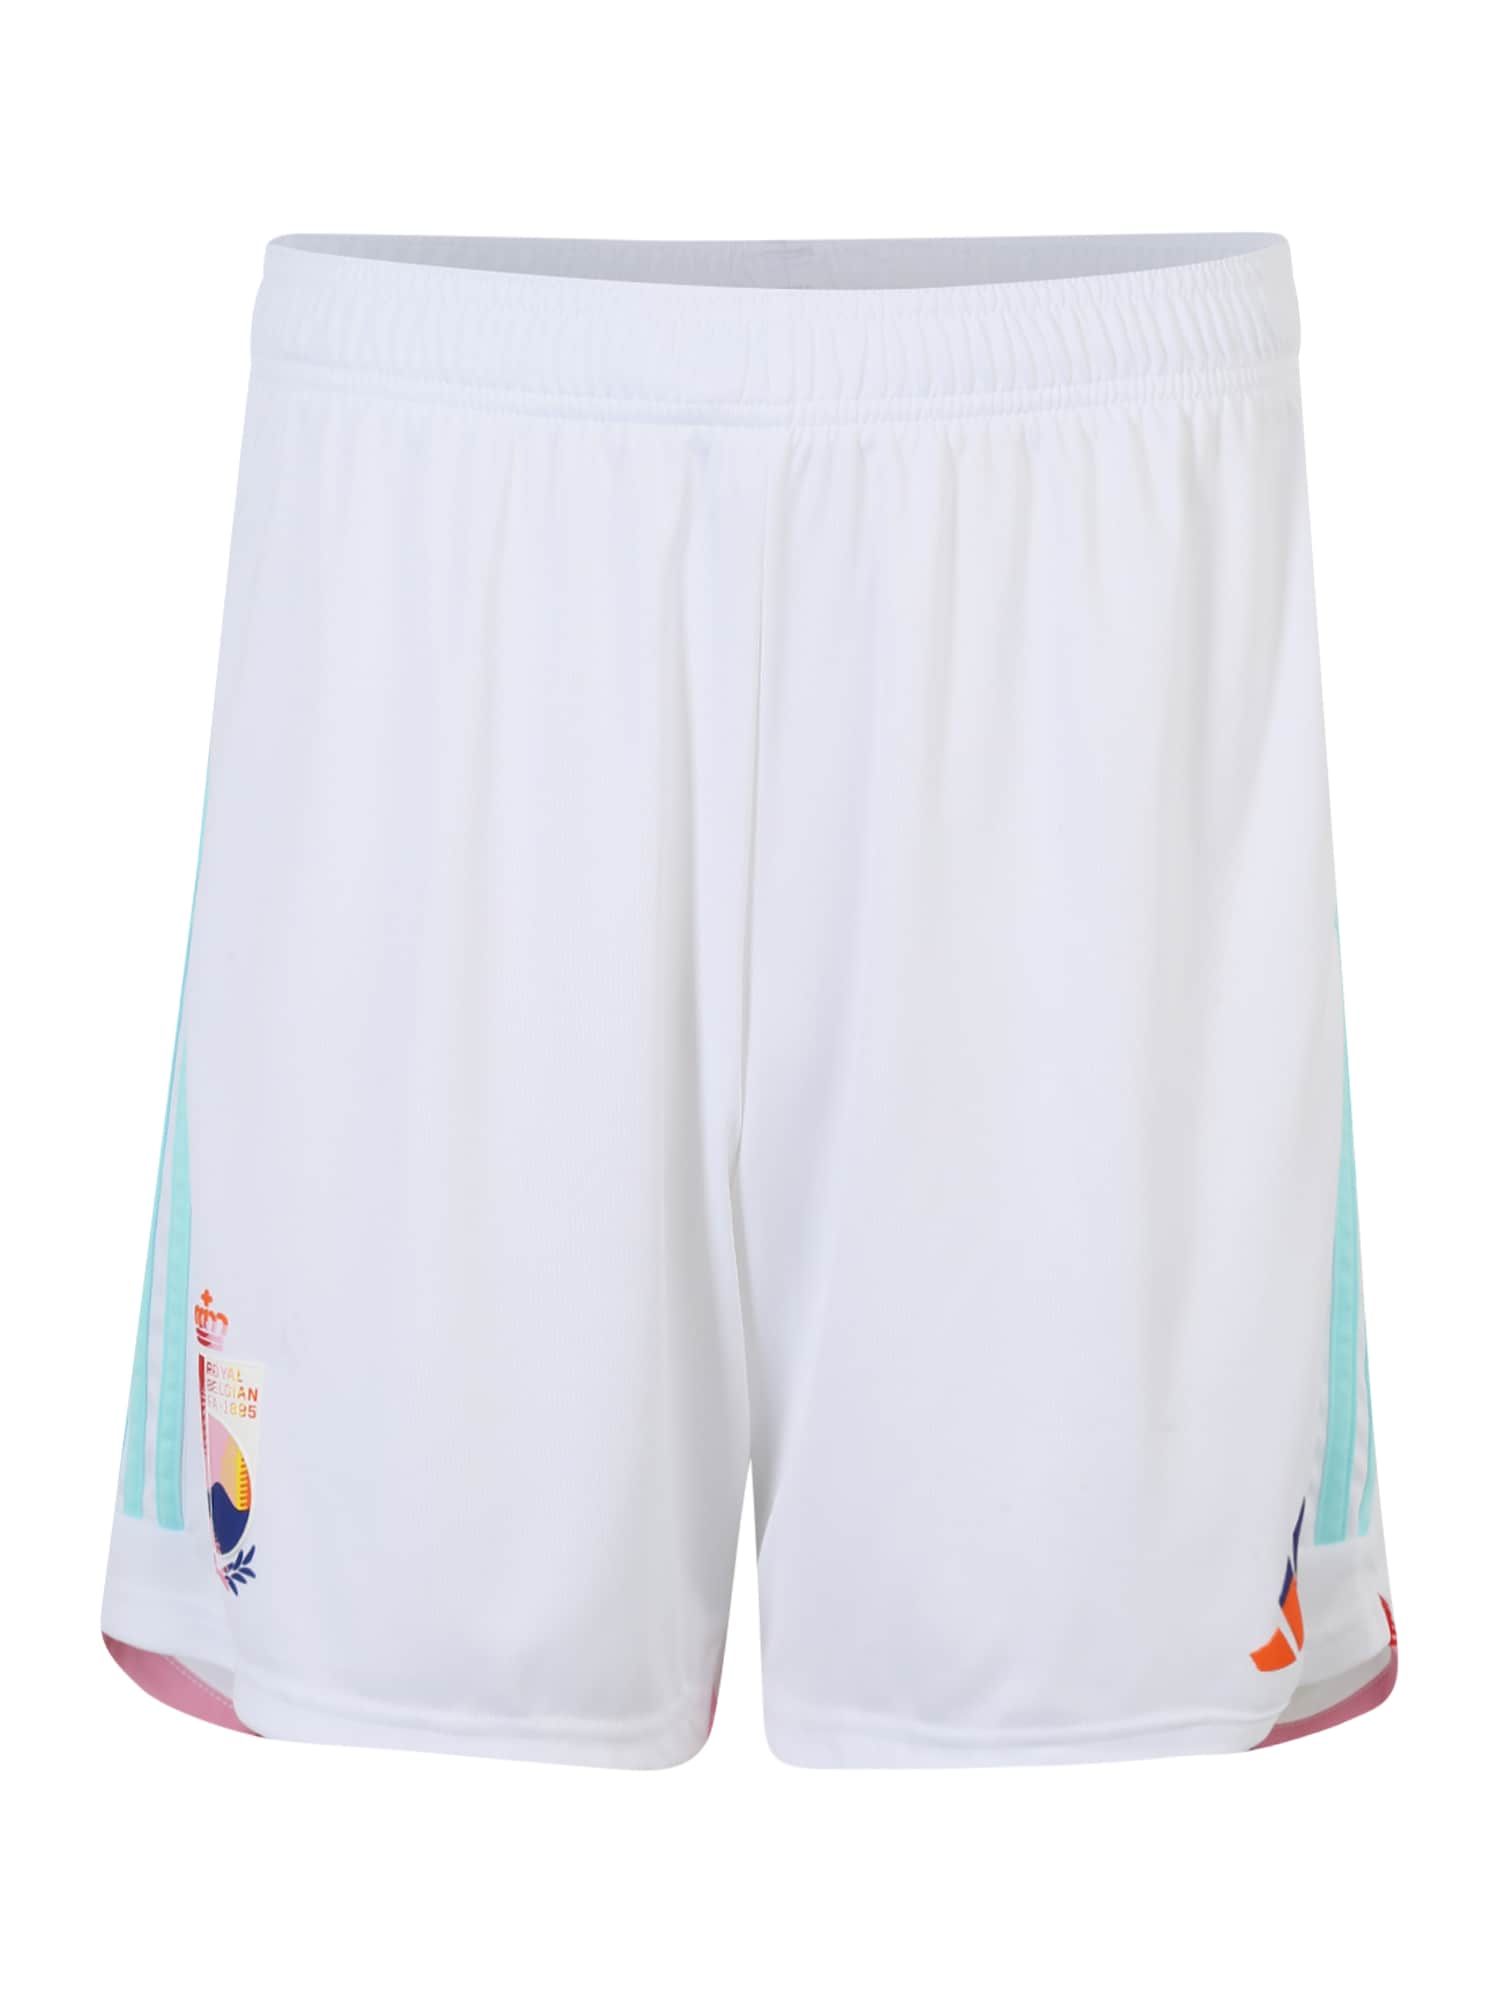 ADIDAS PERFORMANCE Športne hlače  modra / oranžna / roza / bela